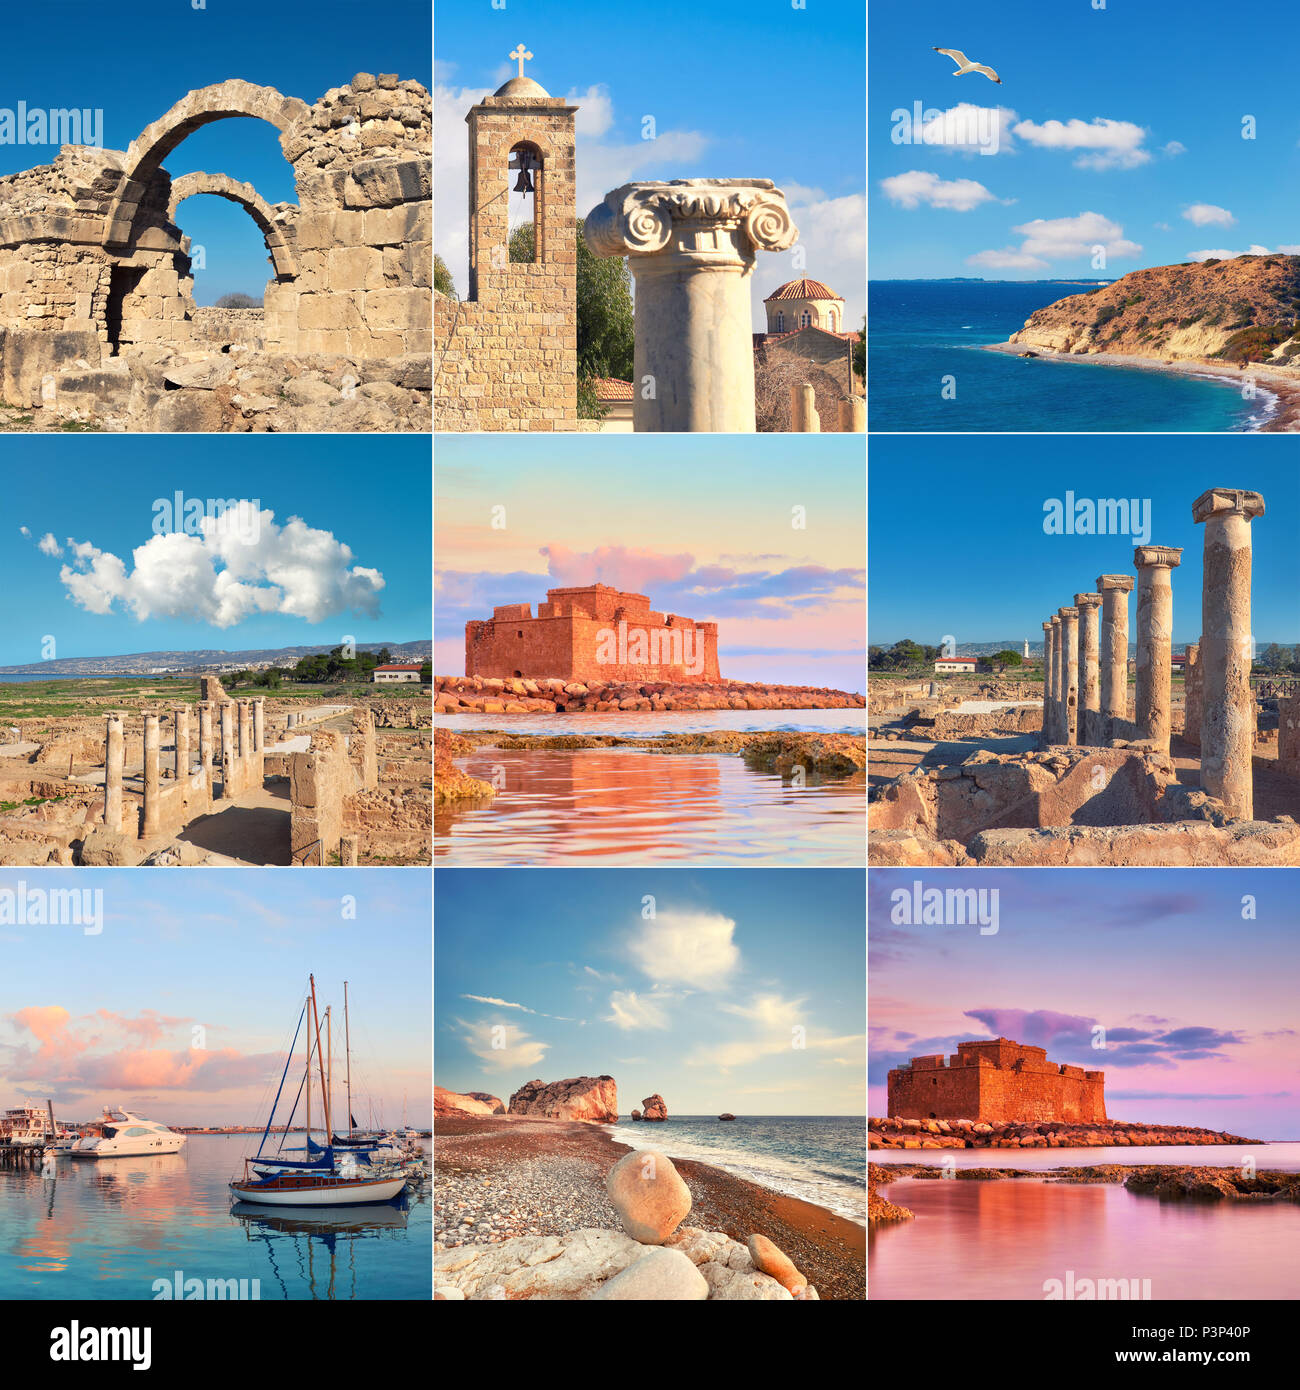 Romantic Cyprus destinations, set of nine pictures, including Harbour Castle, Aphfodite rock and Kato Archaeological Park sites, square composition Stock Photo